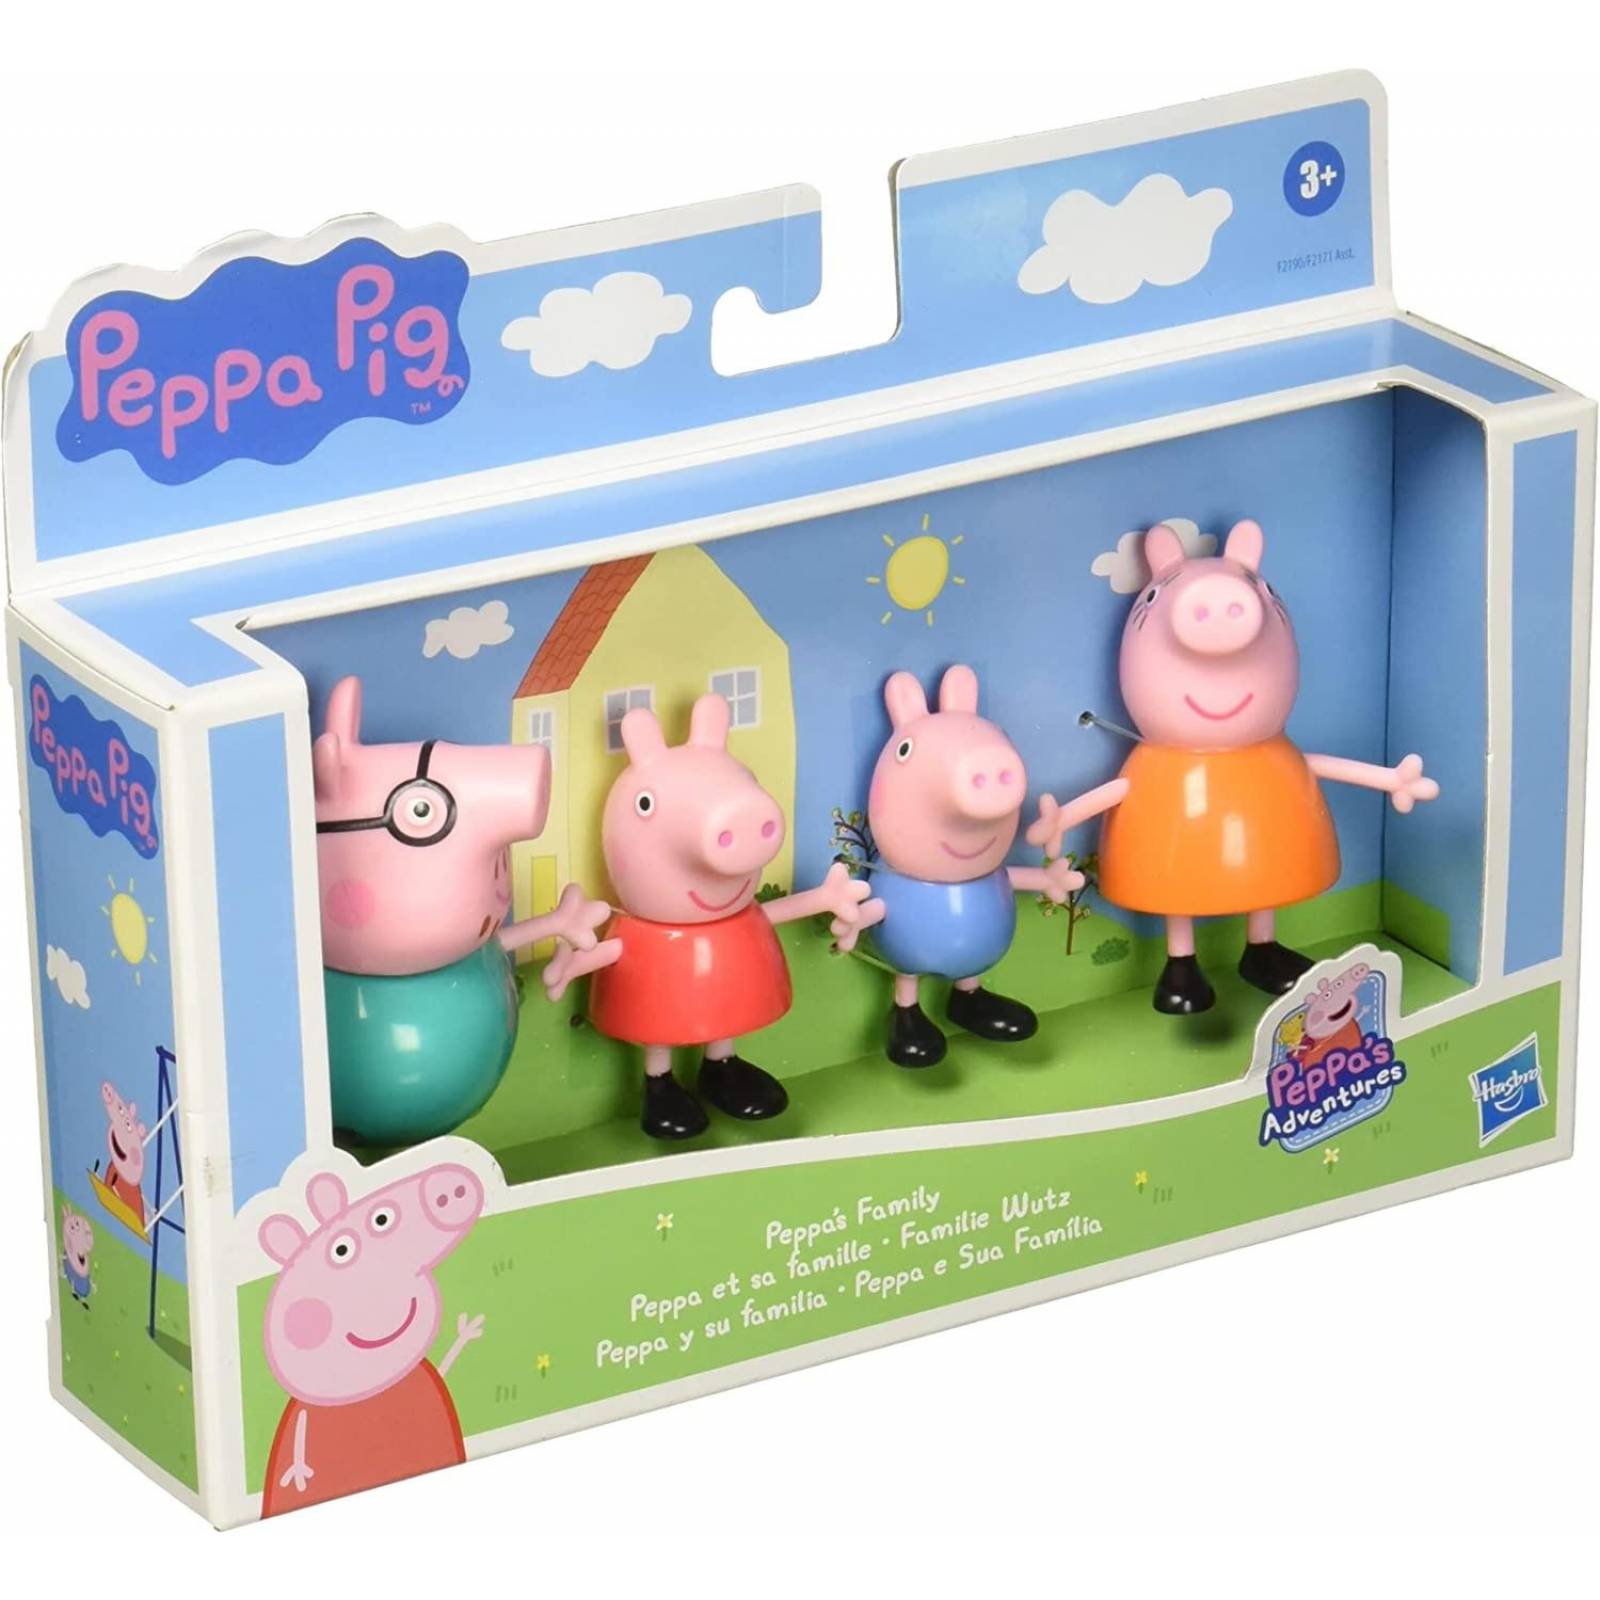 Hasbro - Peppa Pig - Pack de 4 figuras de la familia Peppa Pig en  vacaciones - Modelos surtidos ㅤ, Peppa Pig. Cat 54